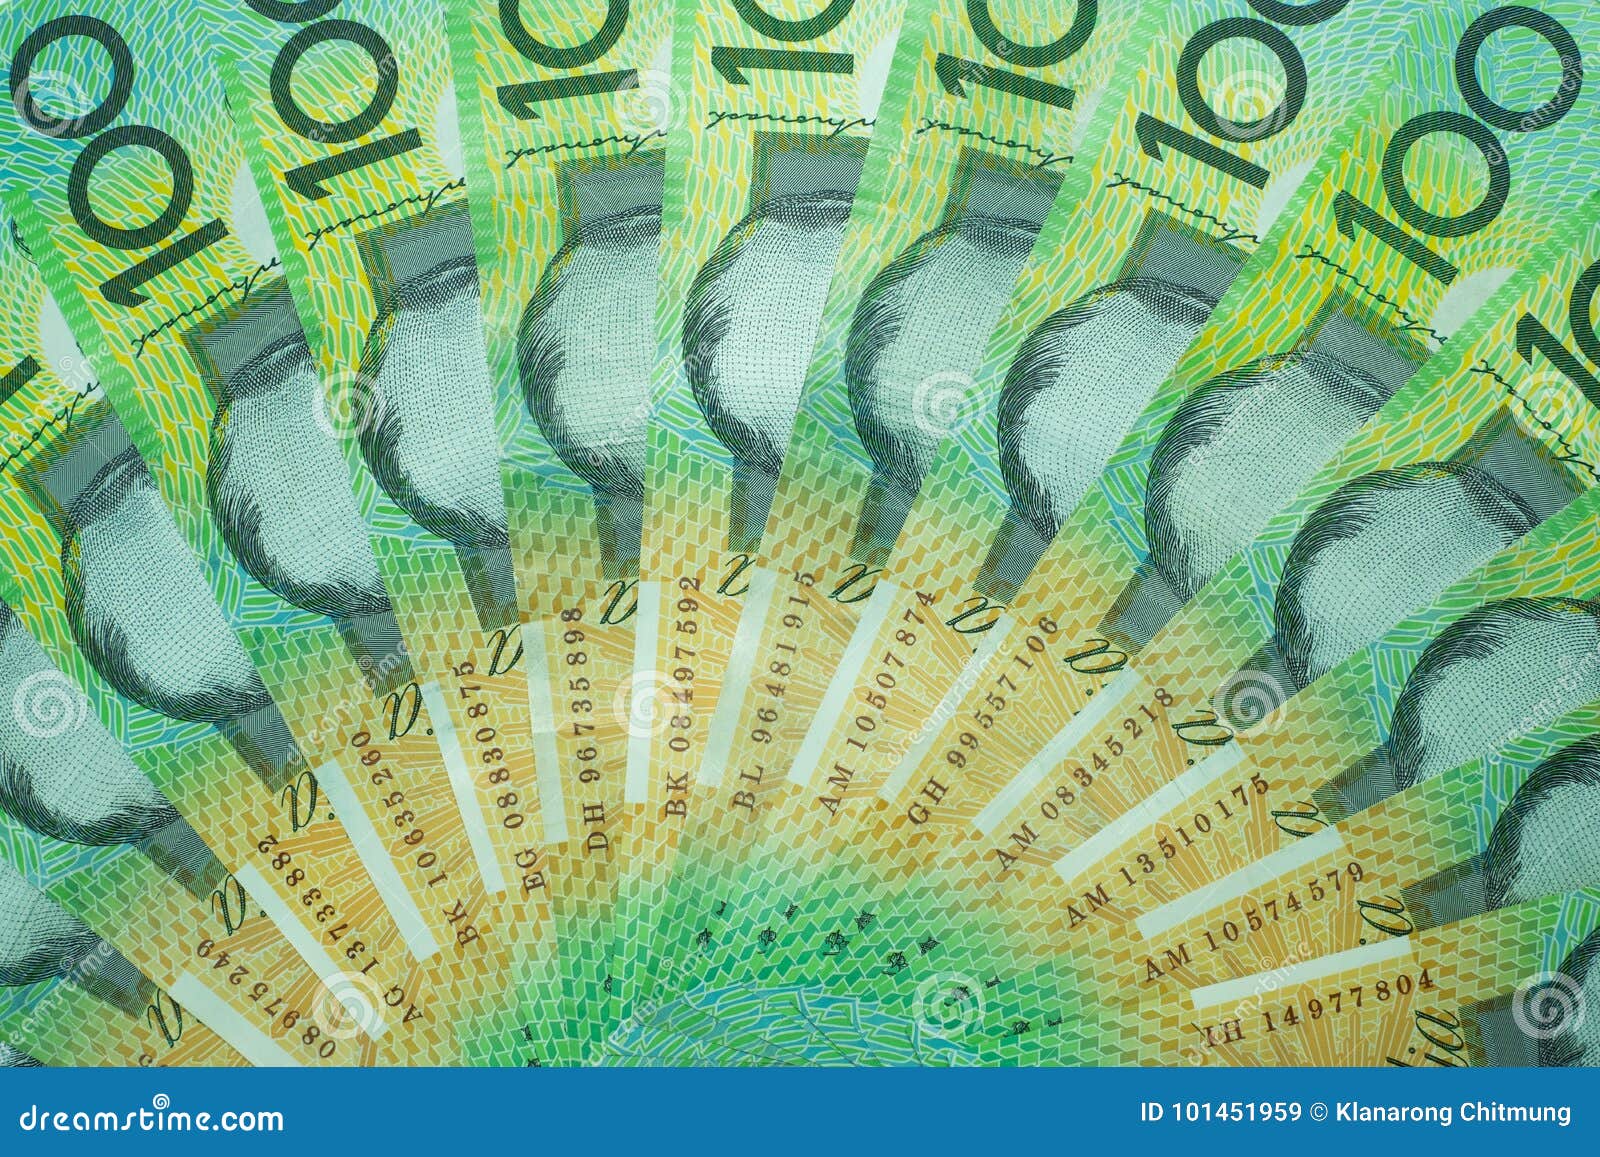 Australian Dollar, Australia Money Banknotes Stack on White Background Stock Image - Image of green, heap: 101451959